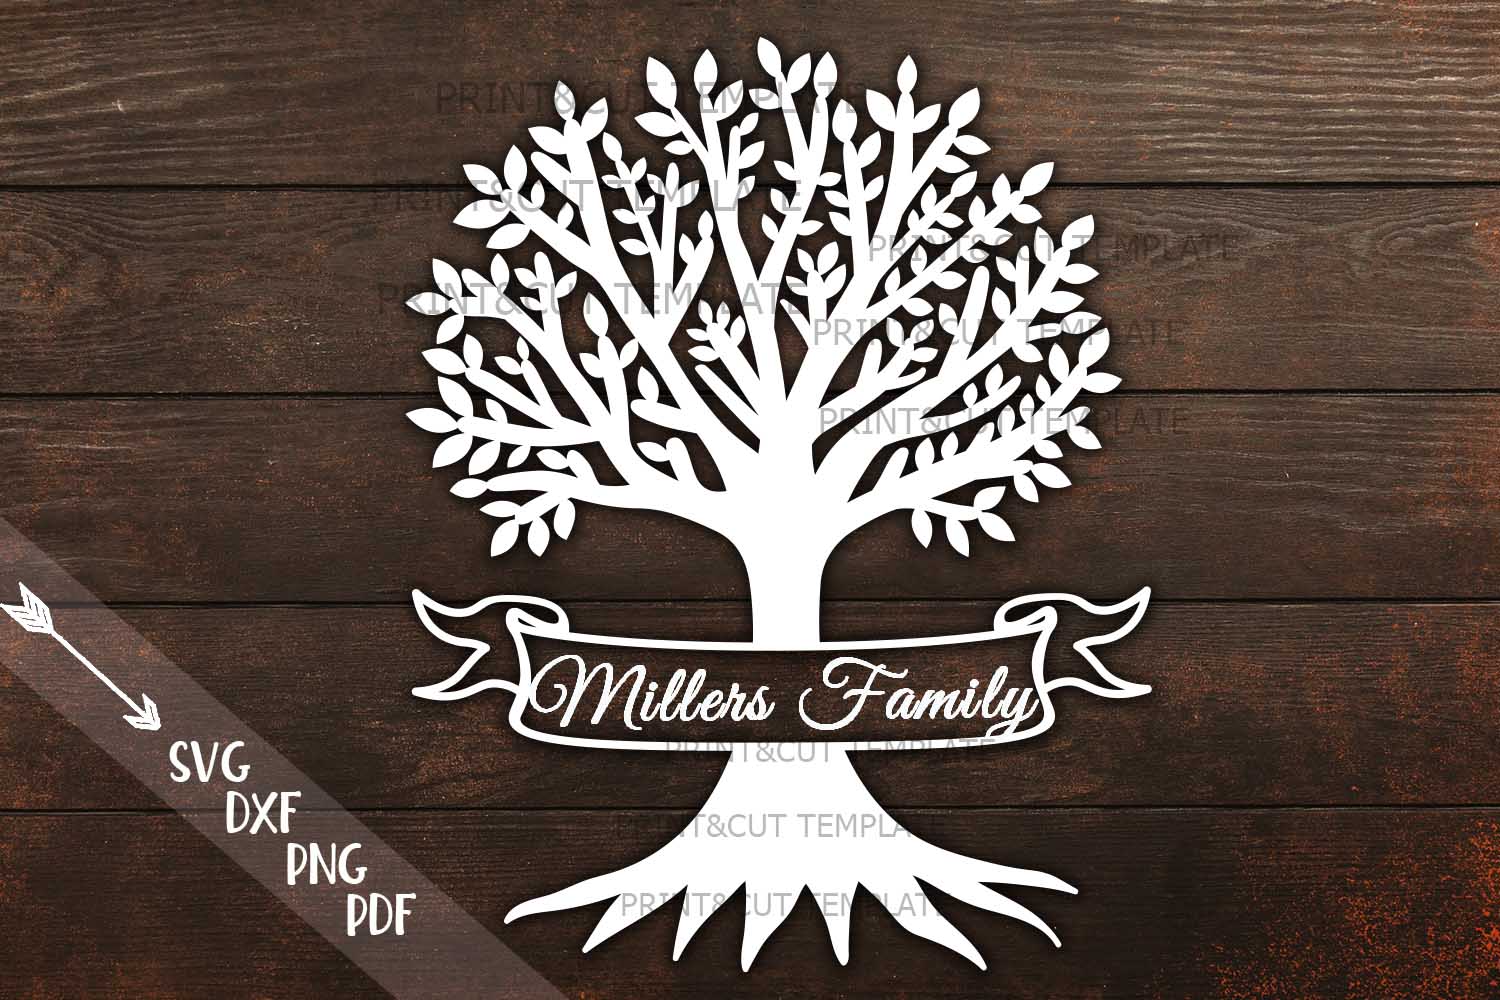 Download Family tree svg Graphic by Cornelia - Creative Fabrica